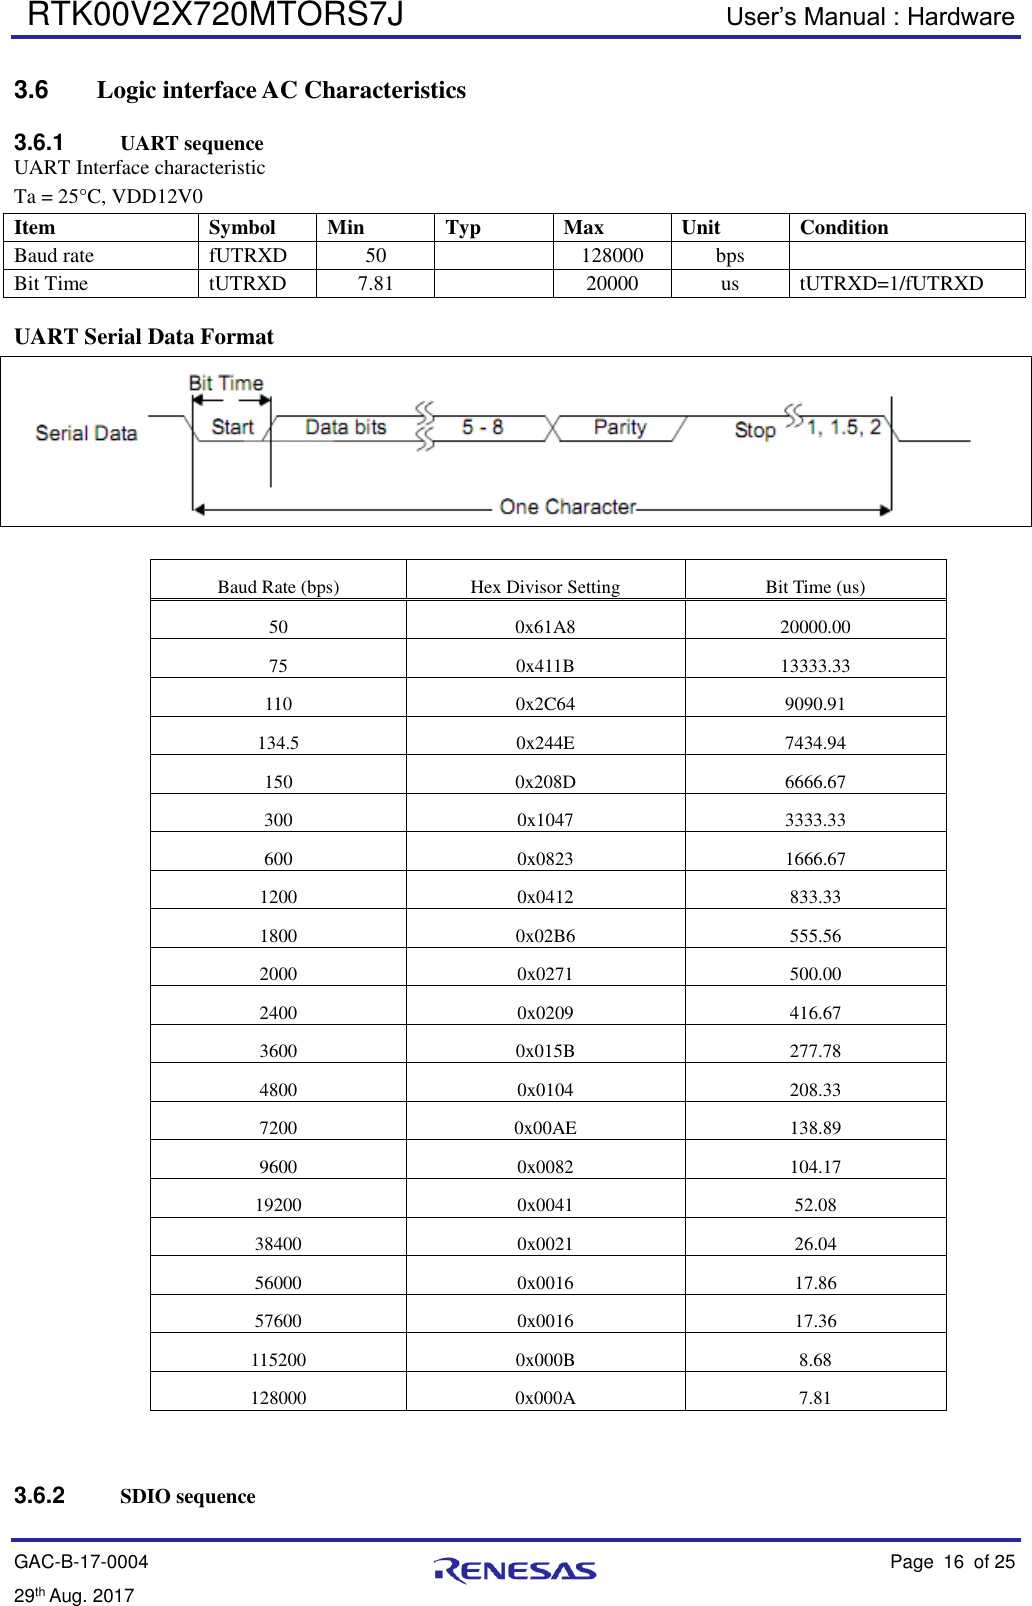  RTK00V2X720MTORS7J User’s Manual : Hardware GAC-B-17-0004    Page 16  of 25 29th Aug. 2017    3.6  Logic interface AC Characteristics  3.6.1  UART sequence UART Interface characteristic Ta = 25°C, VDD12V0 Item Symbol Min Typ Max Unit Condition Baud rate fUTRXD 50  128000 bps  Bit Time tUTRXD 7.81  20000 us tUTRXD=1/fUTRXD  UART Serial Data Format   Baud Rate (bps) Hex Divisor Setting Bit Time (us) 50 0x61A8 20000.00   75 0x411B 13333.33   110 0x2C64 9090.91   134.5 0x244E 7434.94   150 0x208D 6666.67   300 0x1047 3333.33   600 0x0823 1666.67   1200 0x0412 833.33   1800 0x02B6 555.56   2000 0x0271 500.00   2400 0x0209 416.67   3600 0x015B 277.78   4800 0x0104 208.33   7200 0x00AE 138.89   9600 0x0082 104.17   19200 0x0041 52.08   38400 0x0021 26.04   56000 0x0016 17.86   57600 0x0016 17.36   115200 0x000B 8.68   128000 0x000A 7.81      3.6.2  SDIO sequence 